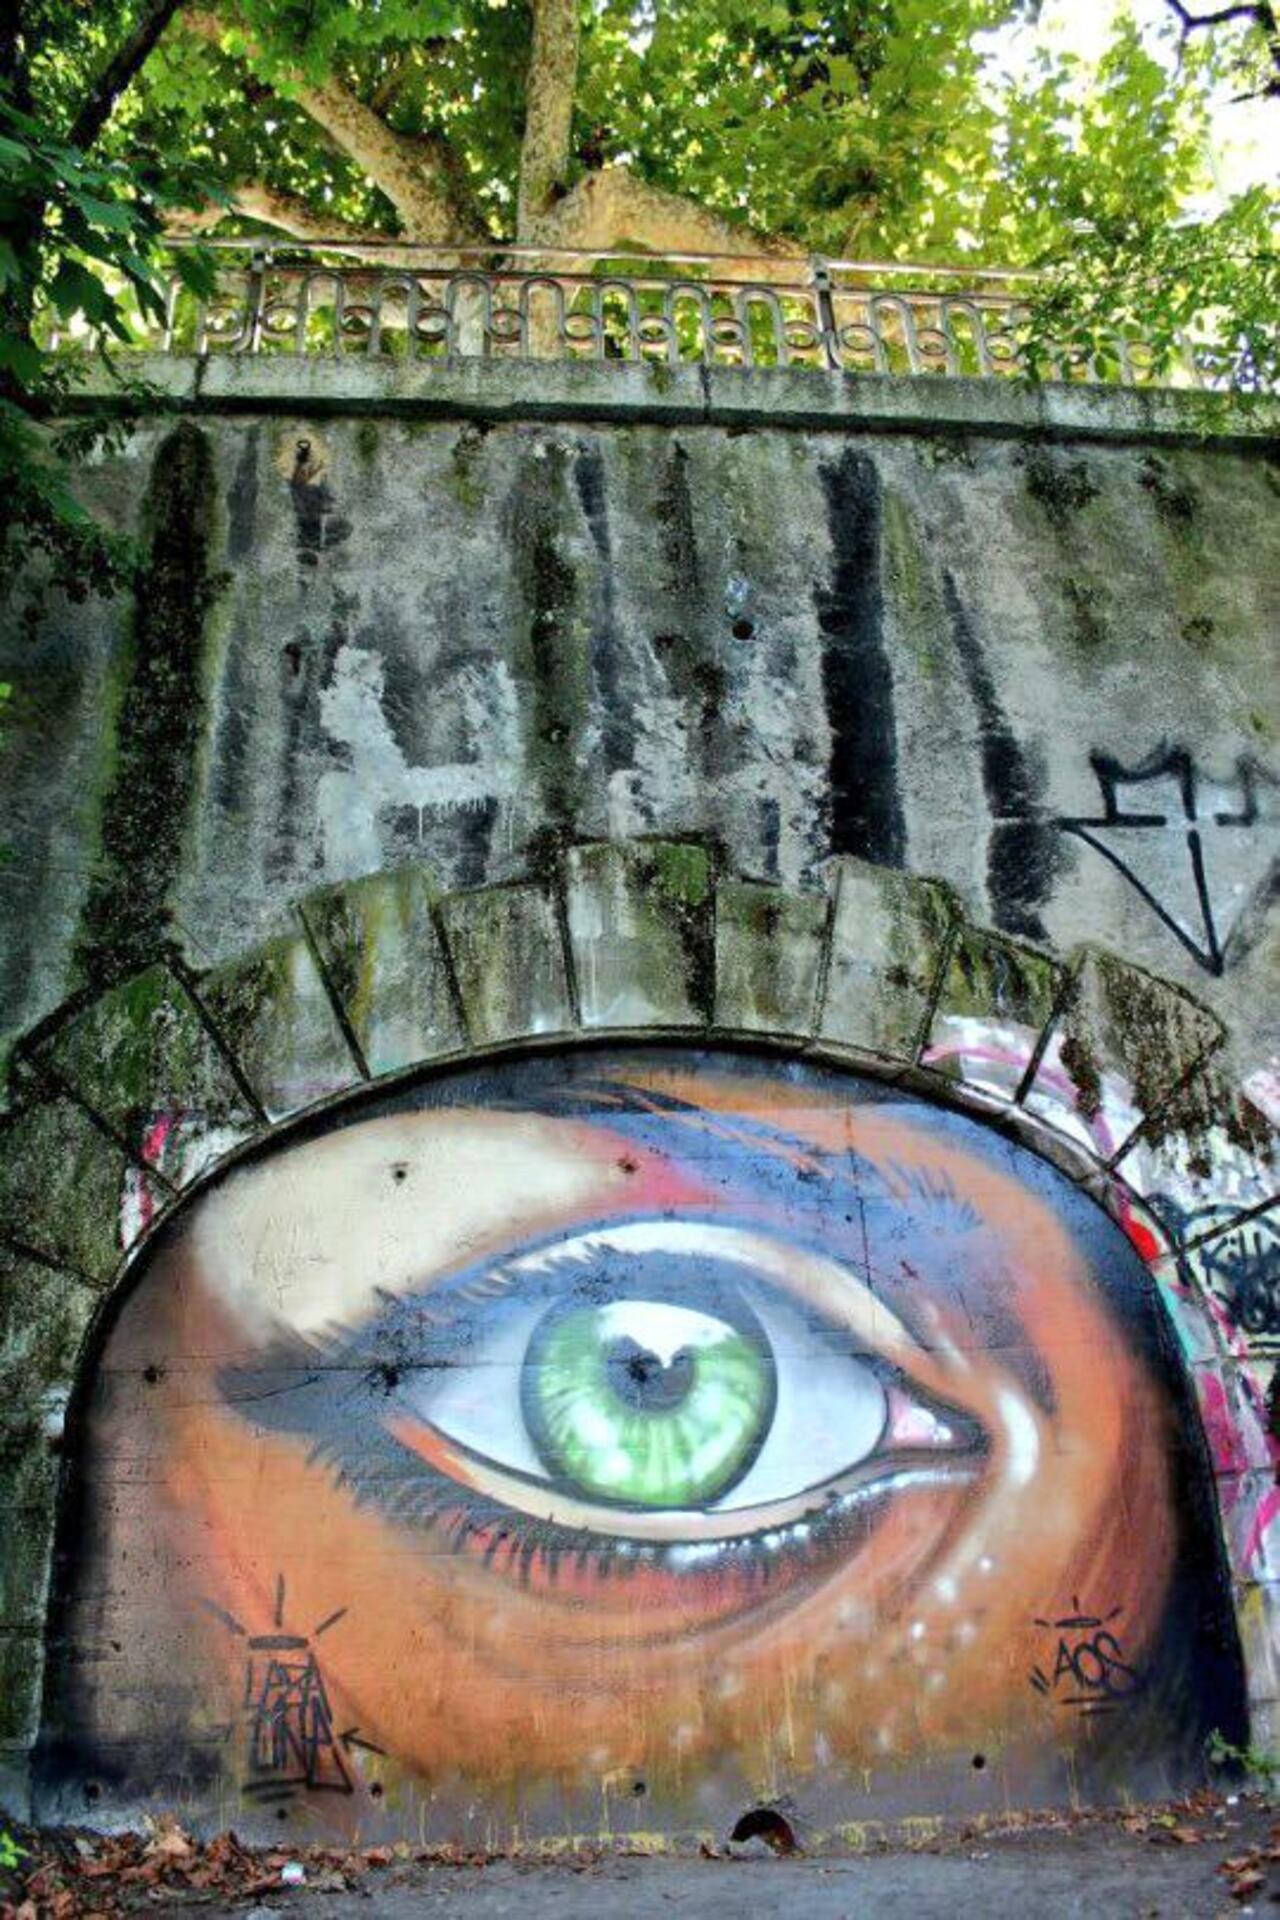 Leza One 
#streetart #art #graffiti #mural http://t.co/oO1hUZEUas